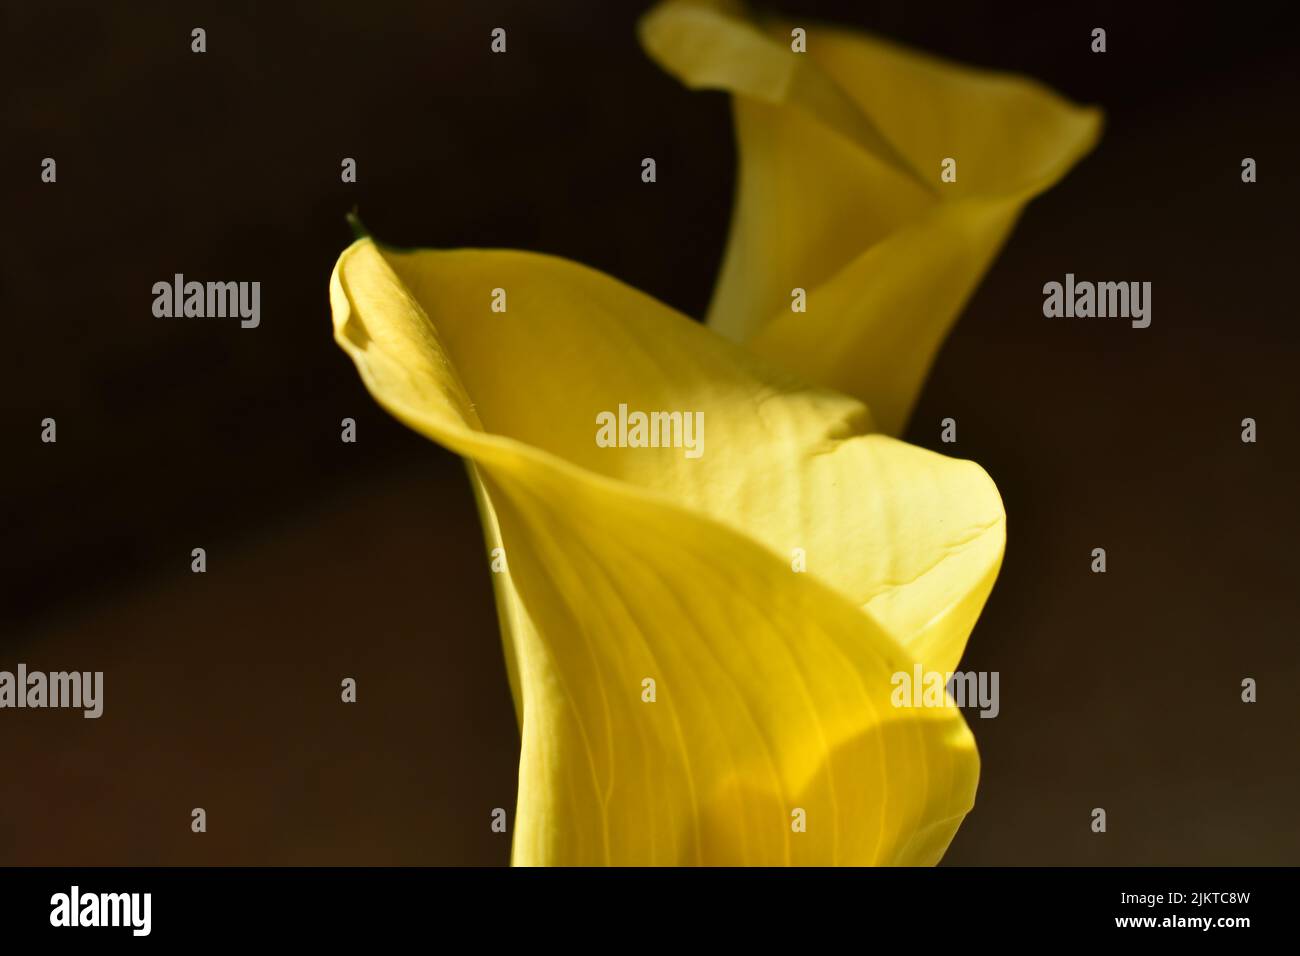 A close up of a golden Calla lily (Zantedeschia elliottiana) on a brown colored background Stock Photo